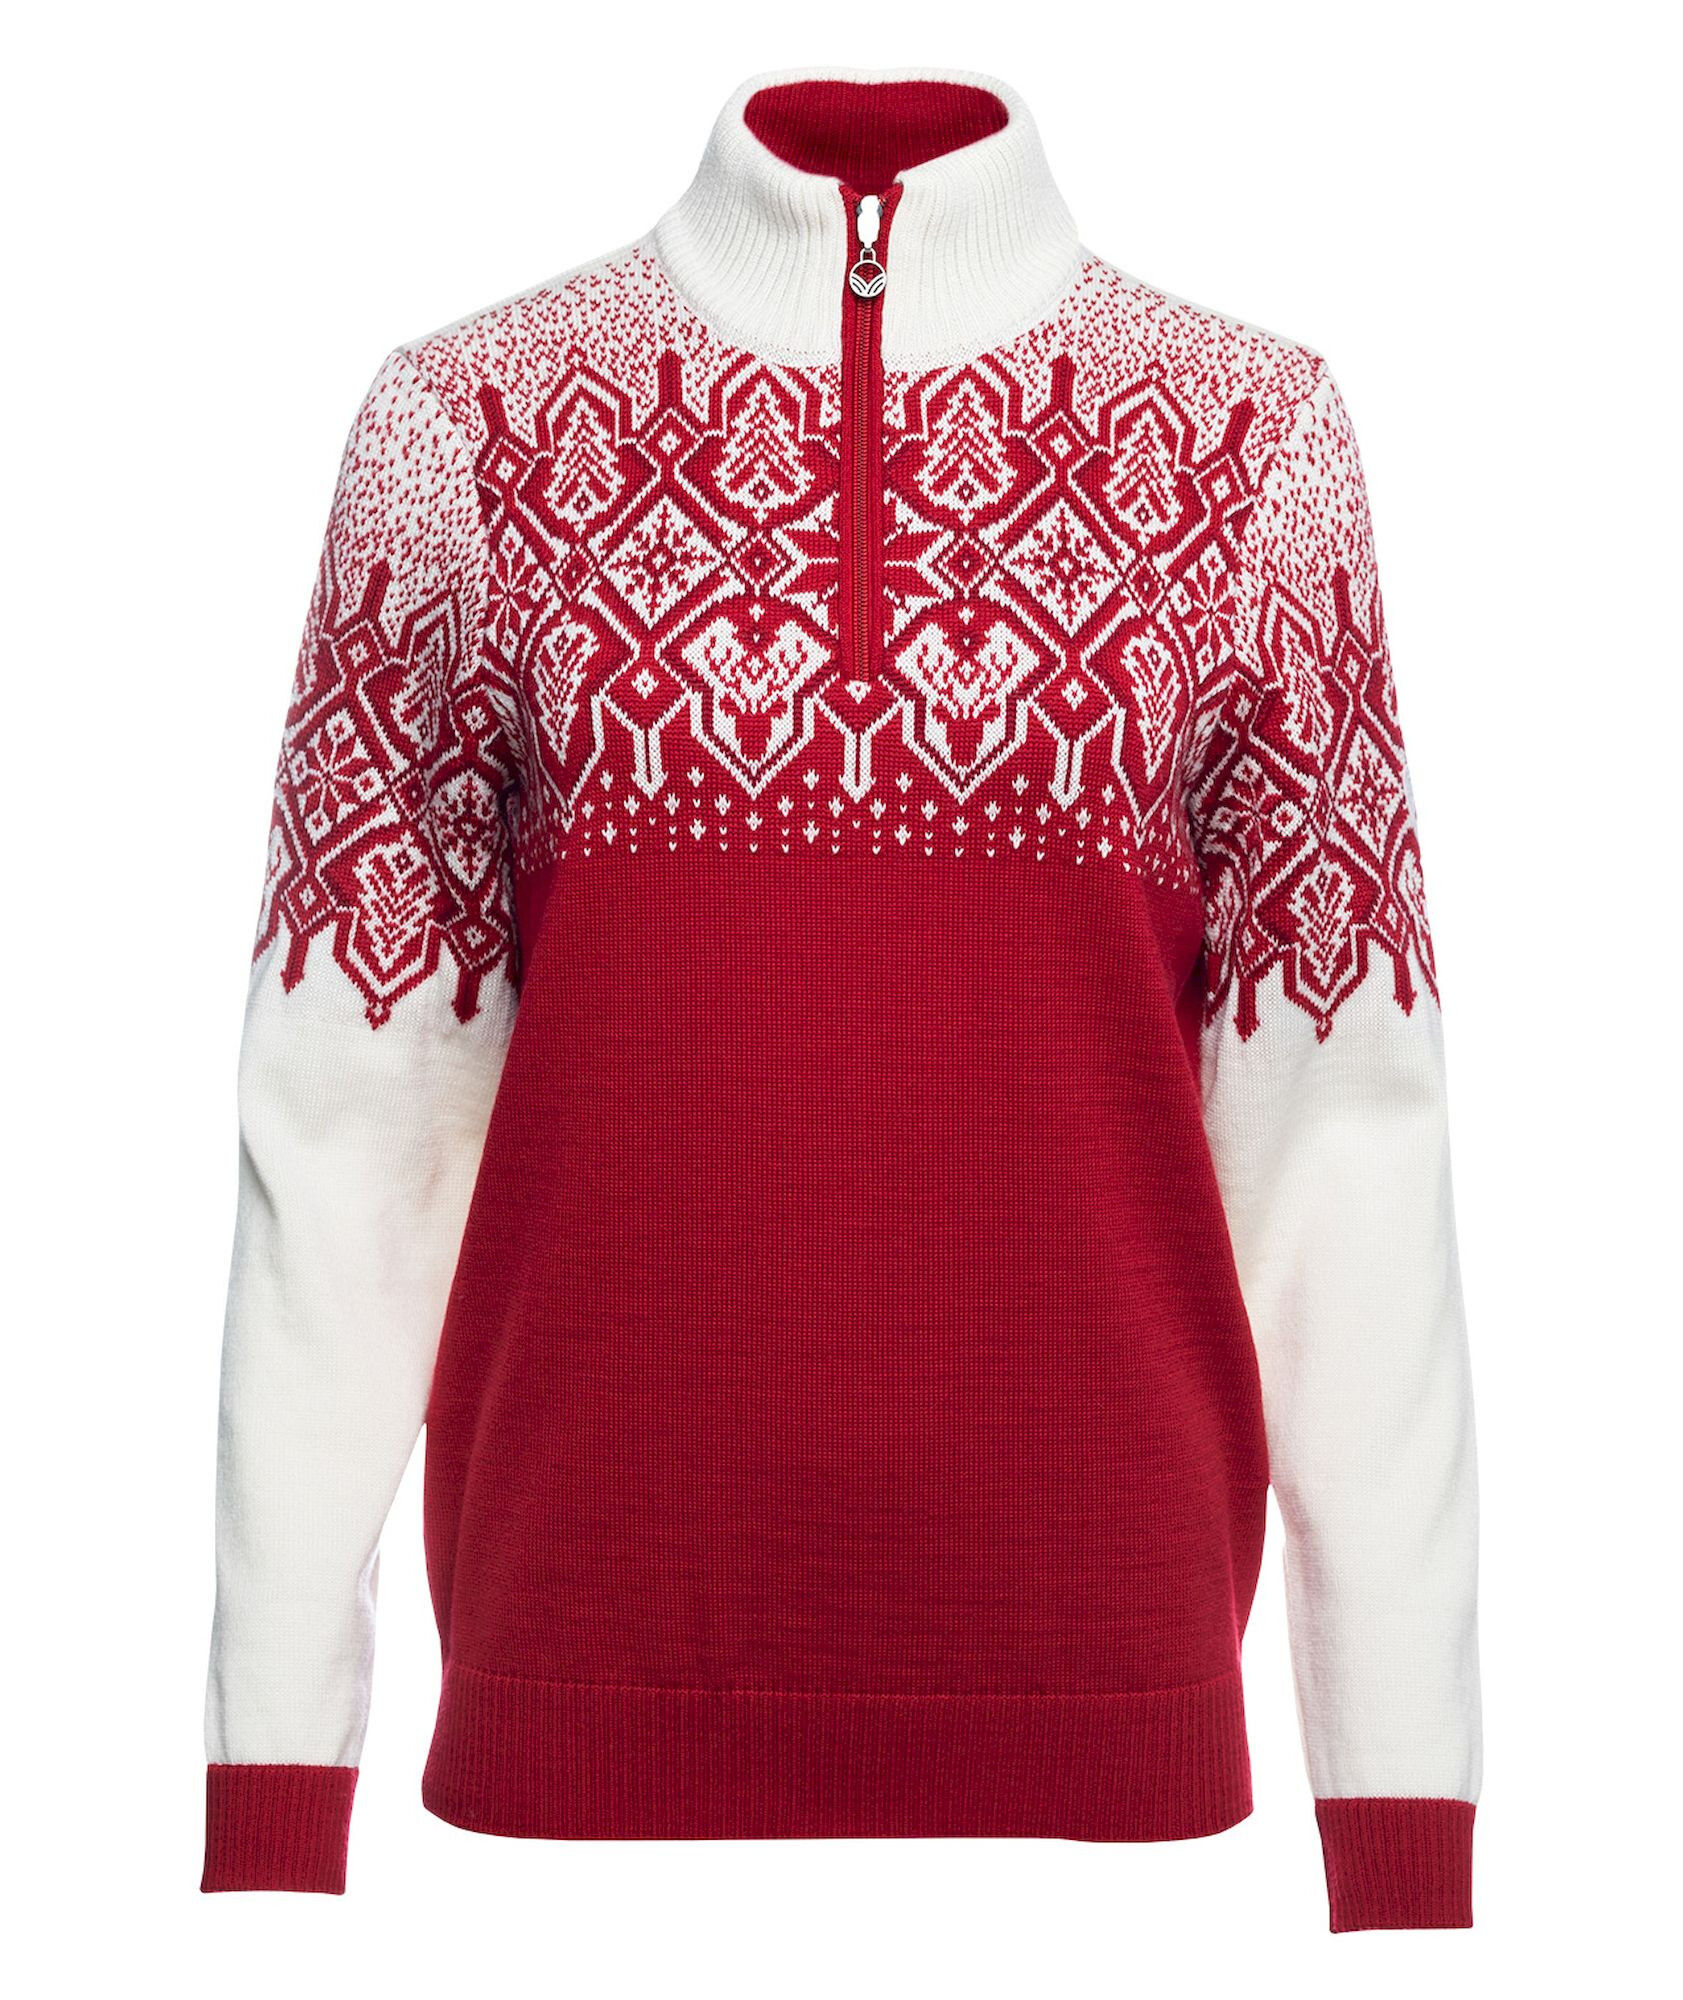 Dale of Norway Winterland Sweater - Pullover in lana merino - Donna | Hardloop